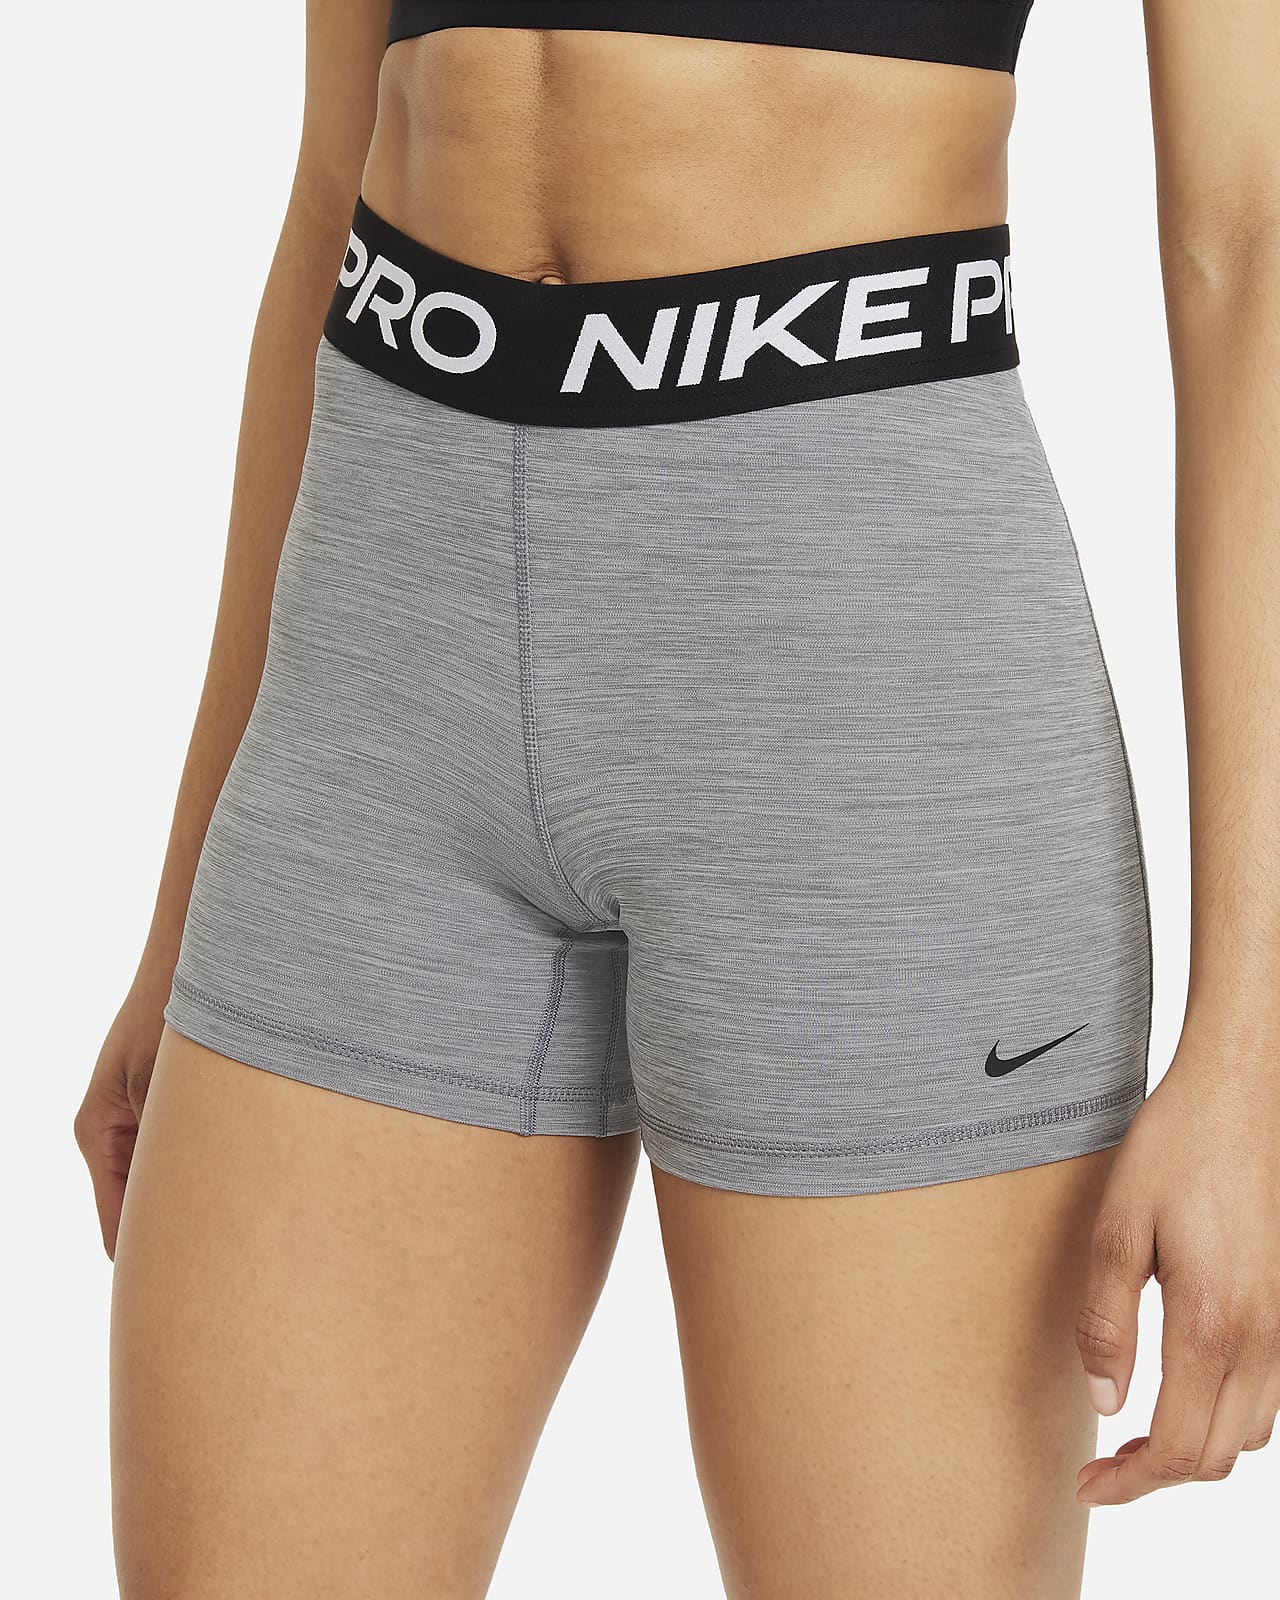 Nike Pro 3 Shorts MainPlace Mall | lupon.gov.ph